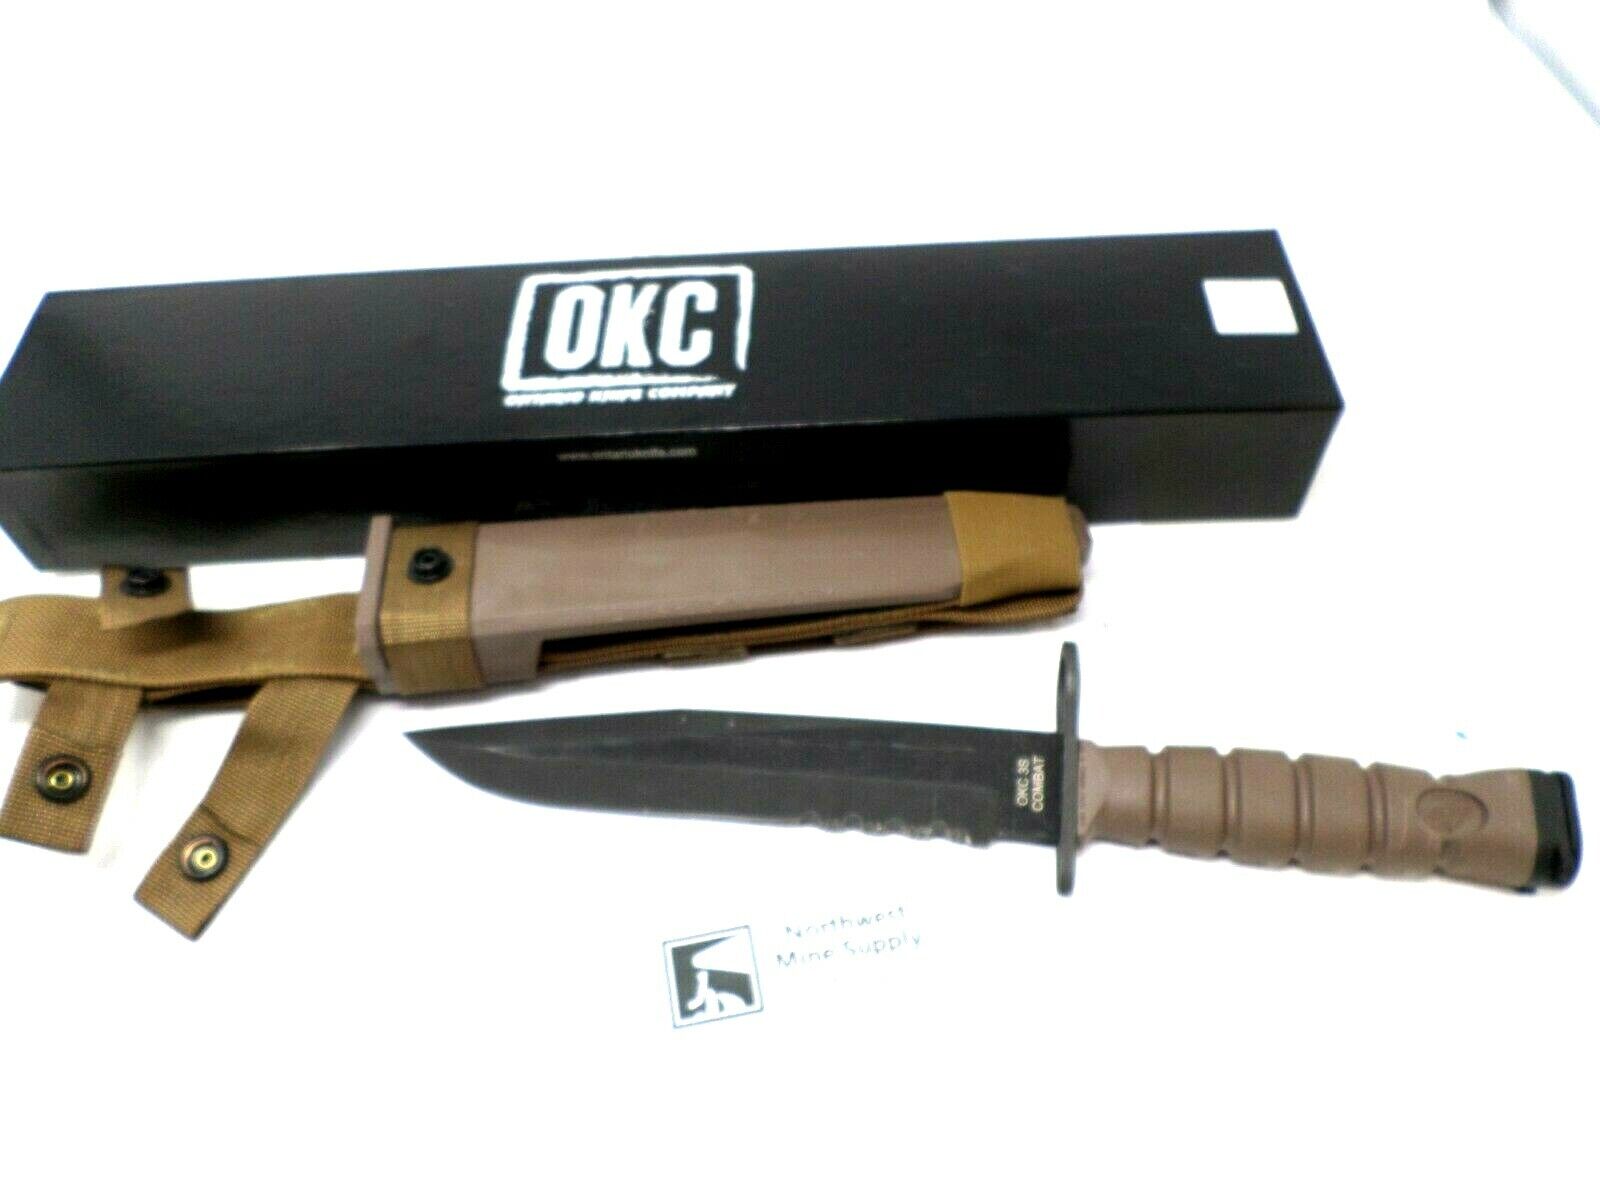 Genuine NEW US Marines Corps USMC Ontario OKC 3S Combat Bayonet Knife & Scabbard